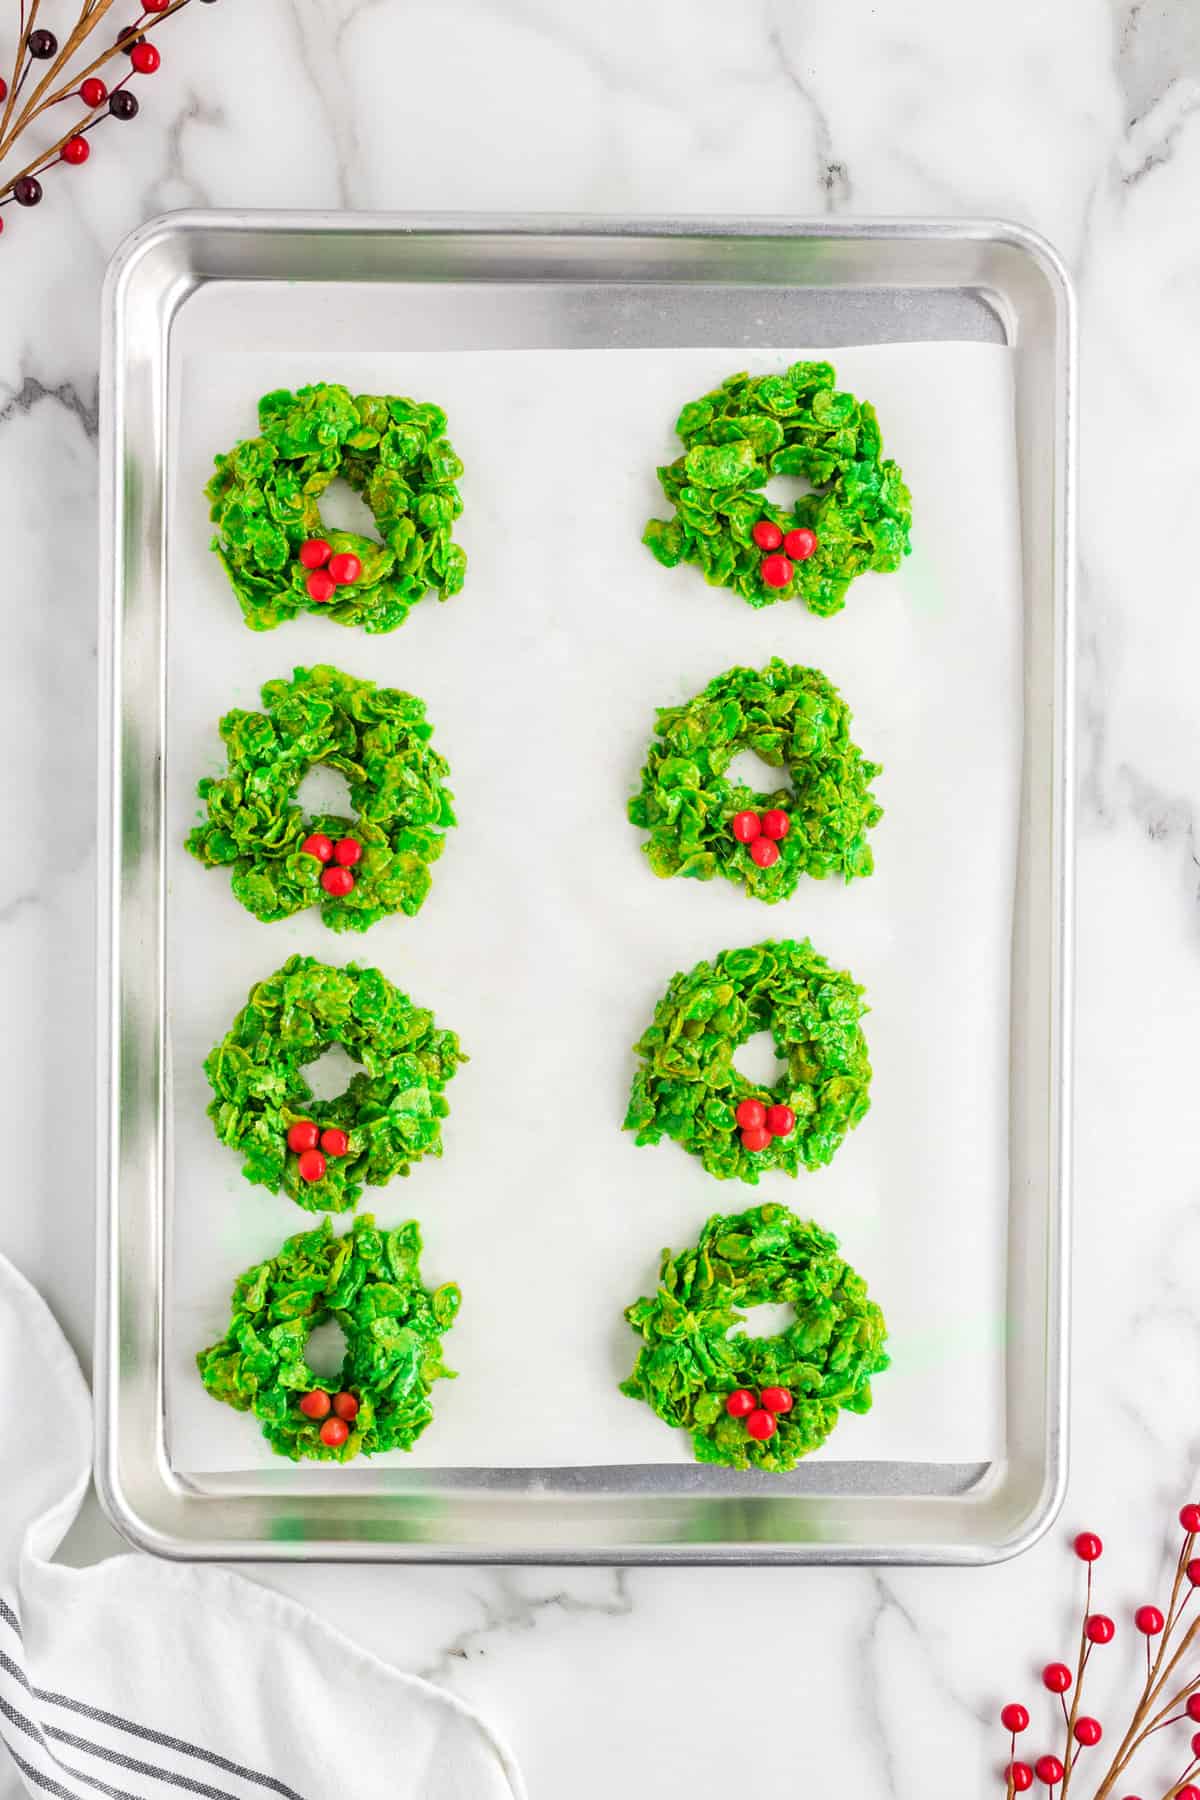 Sheet pan with Christmas Cornflake Wreaths